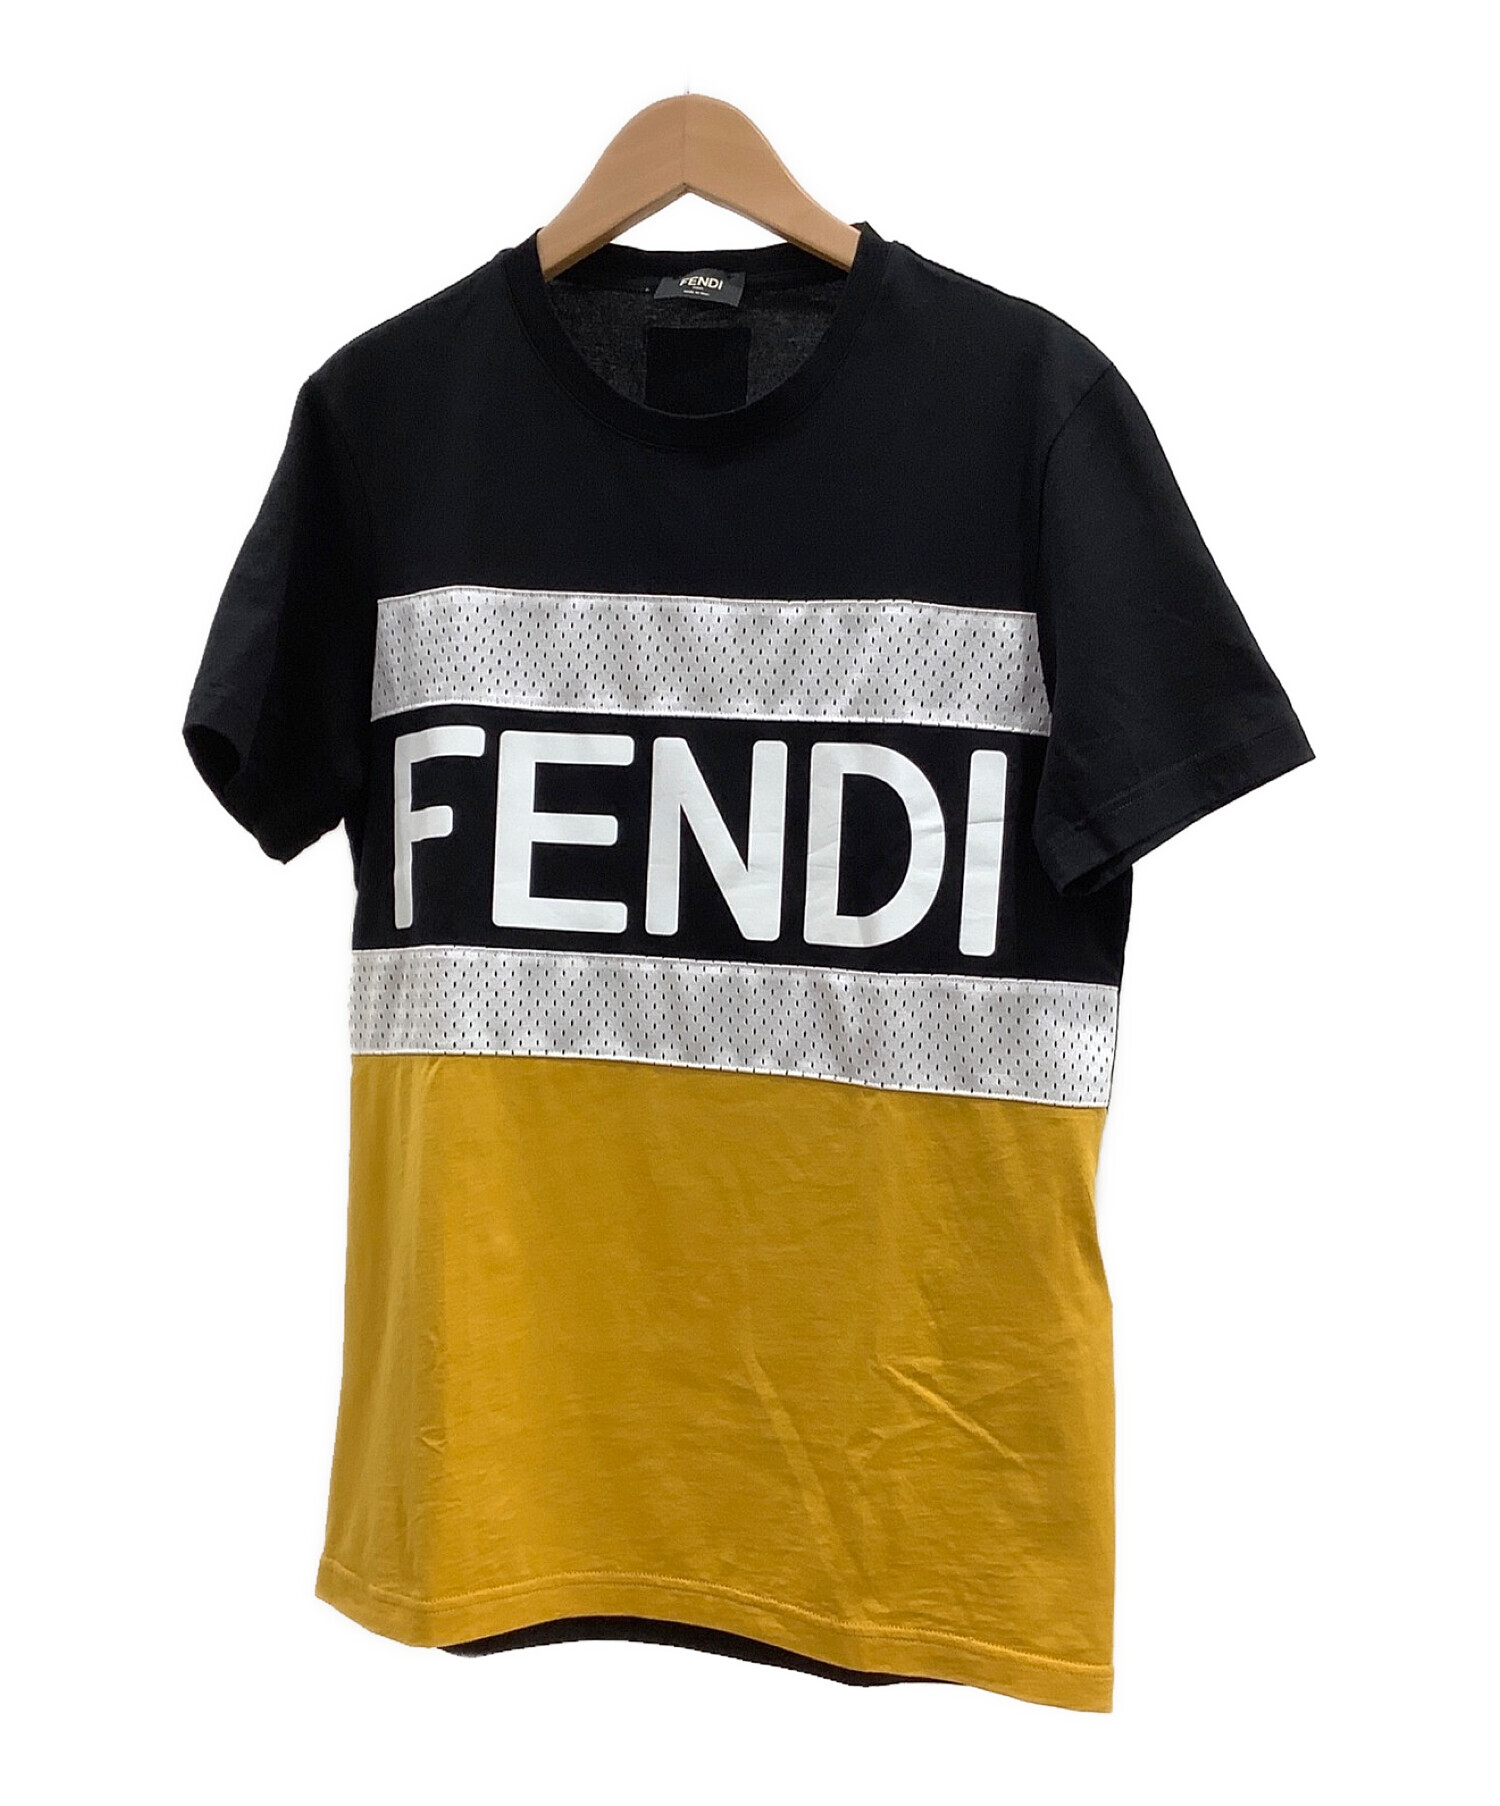 FENDI Tシャツ Sサイズ - Tシャツ